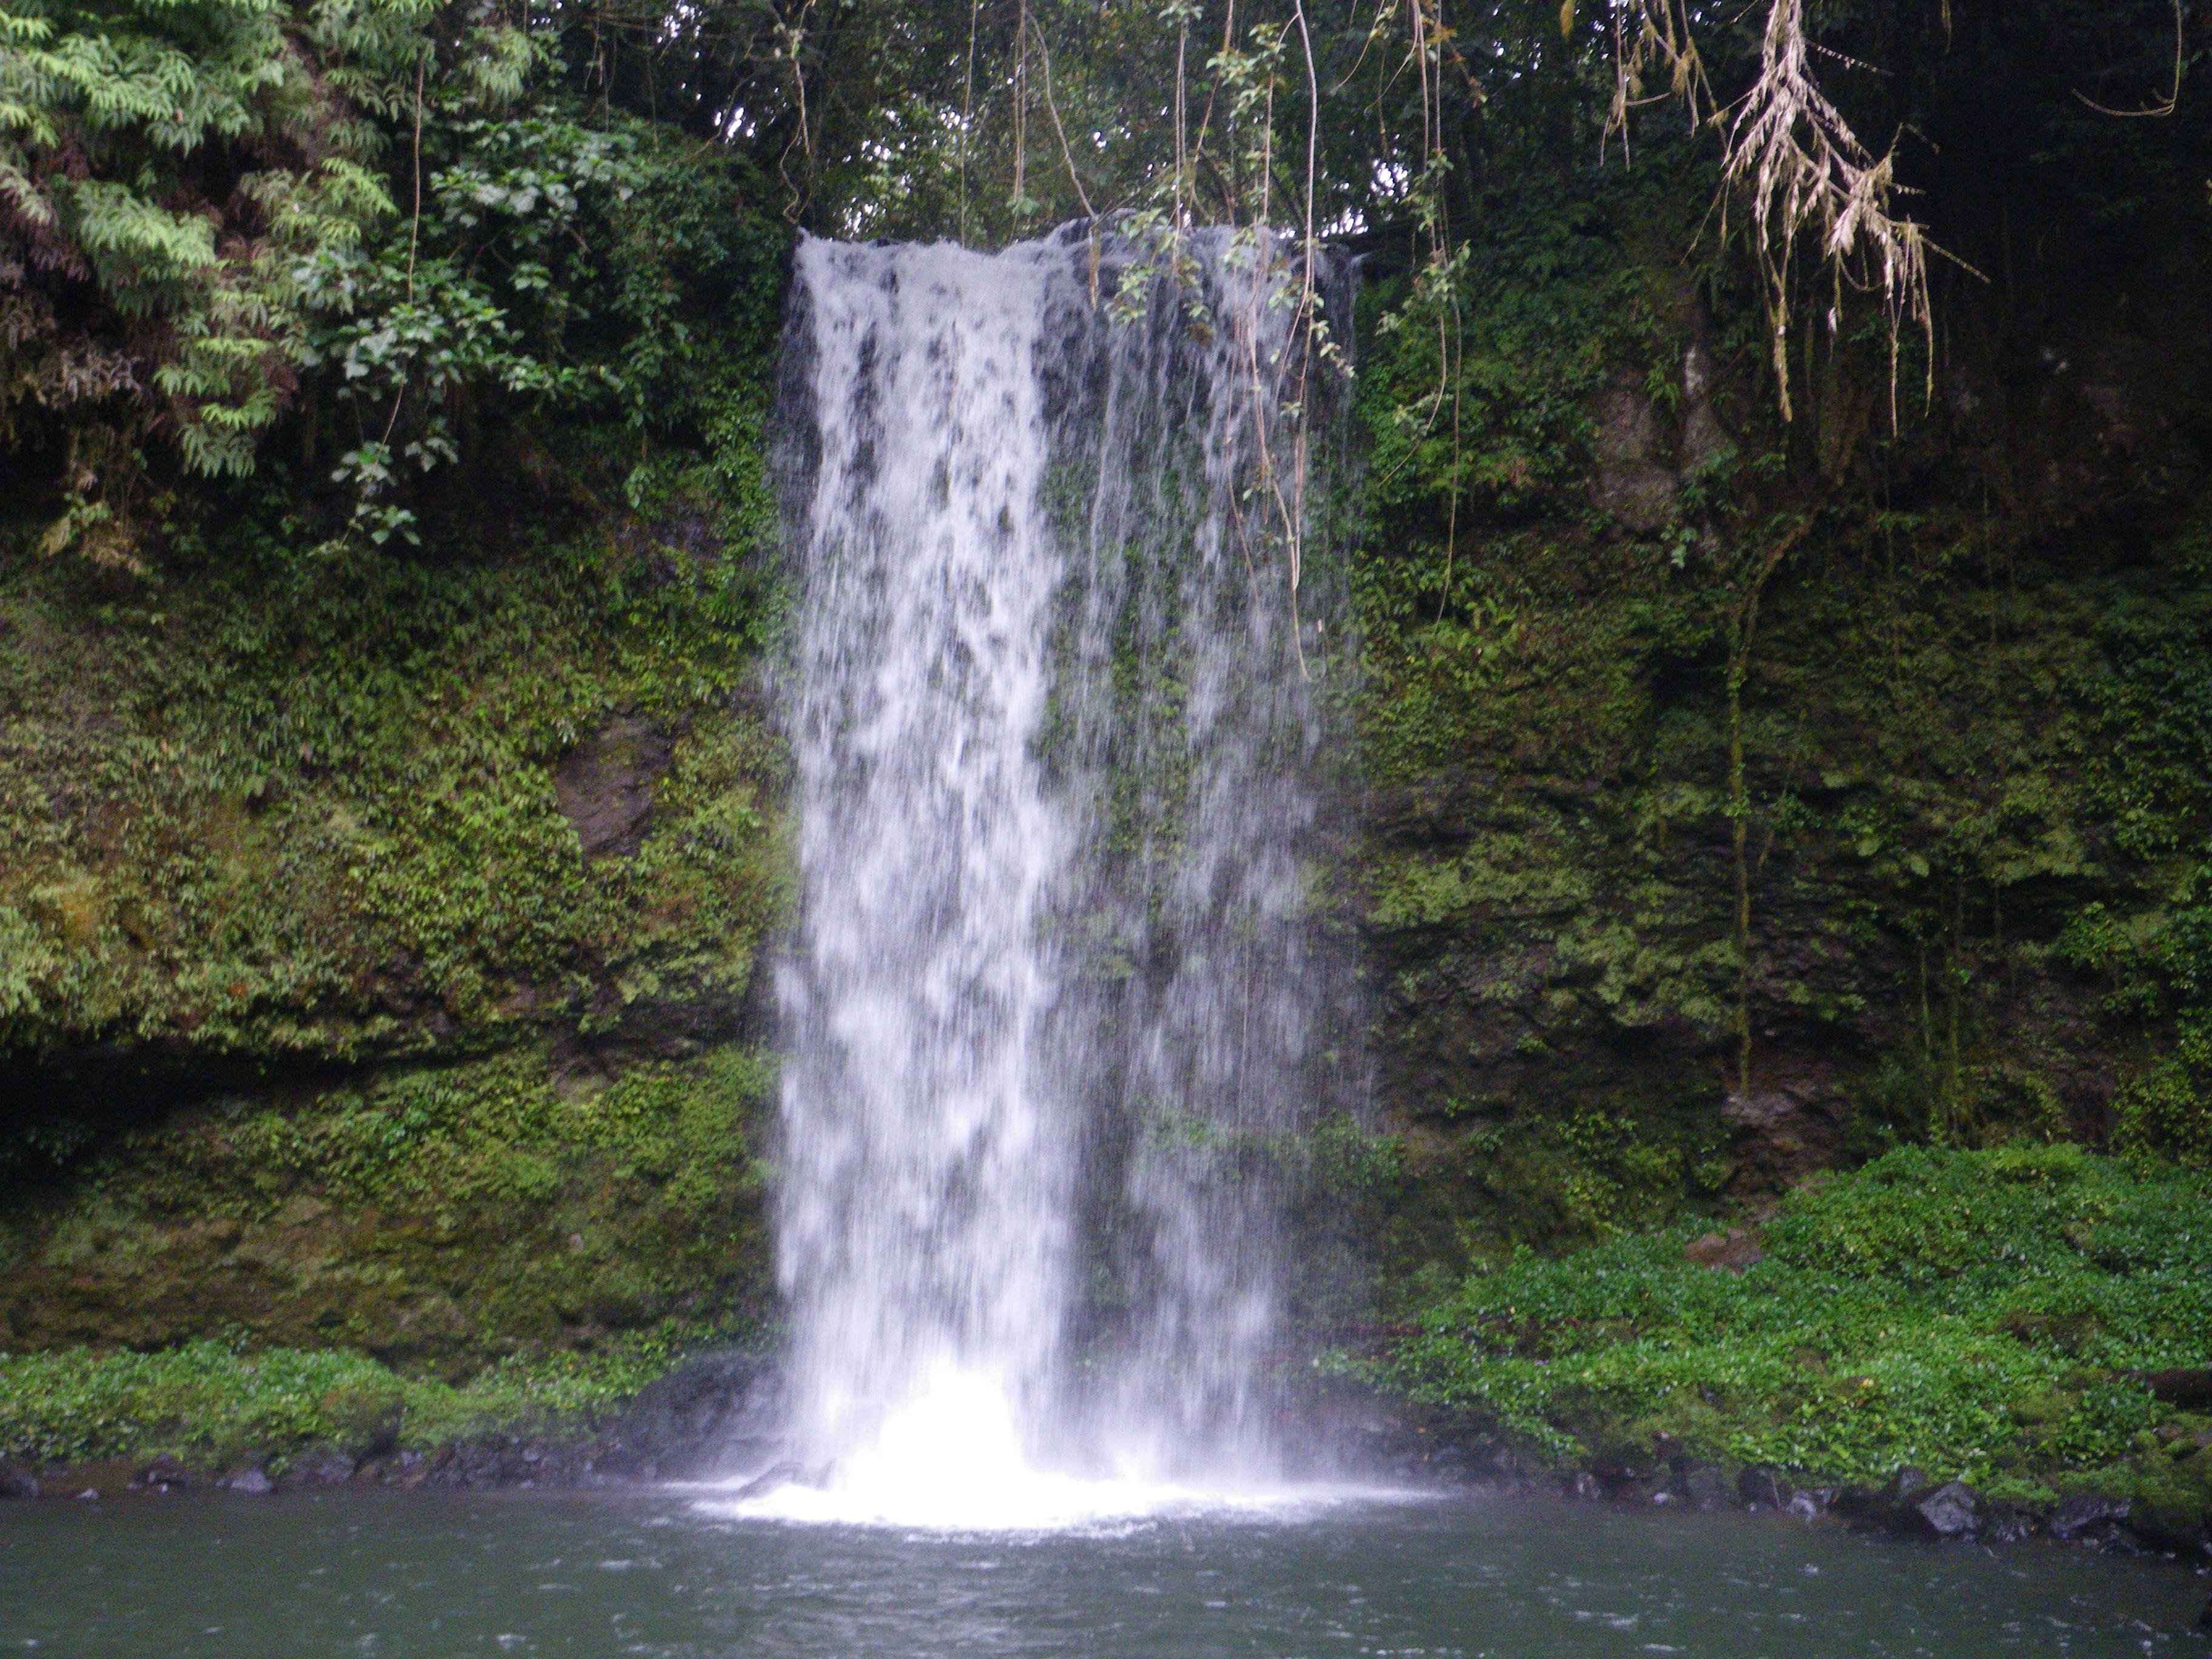 A waterfall at Rumpi Hills. Photograph Olivier Lachenaud, 2009